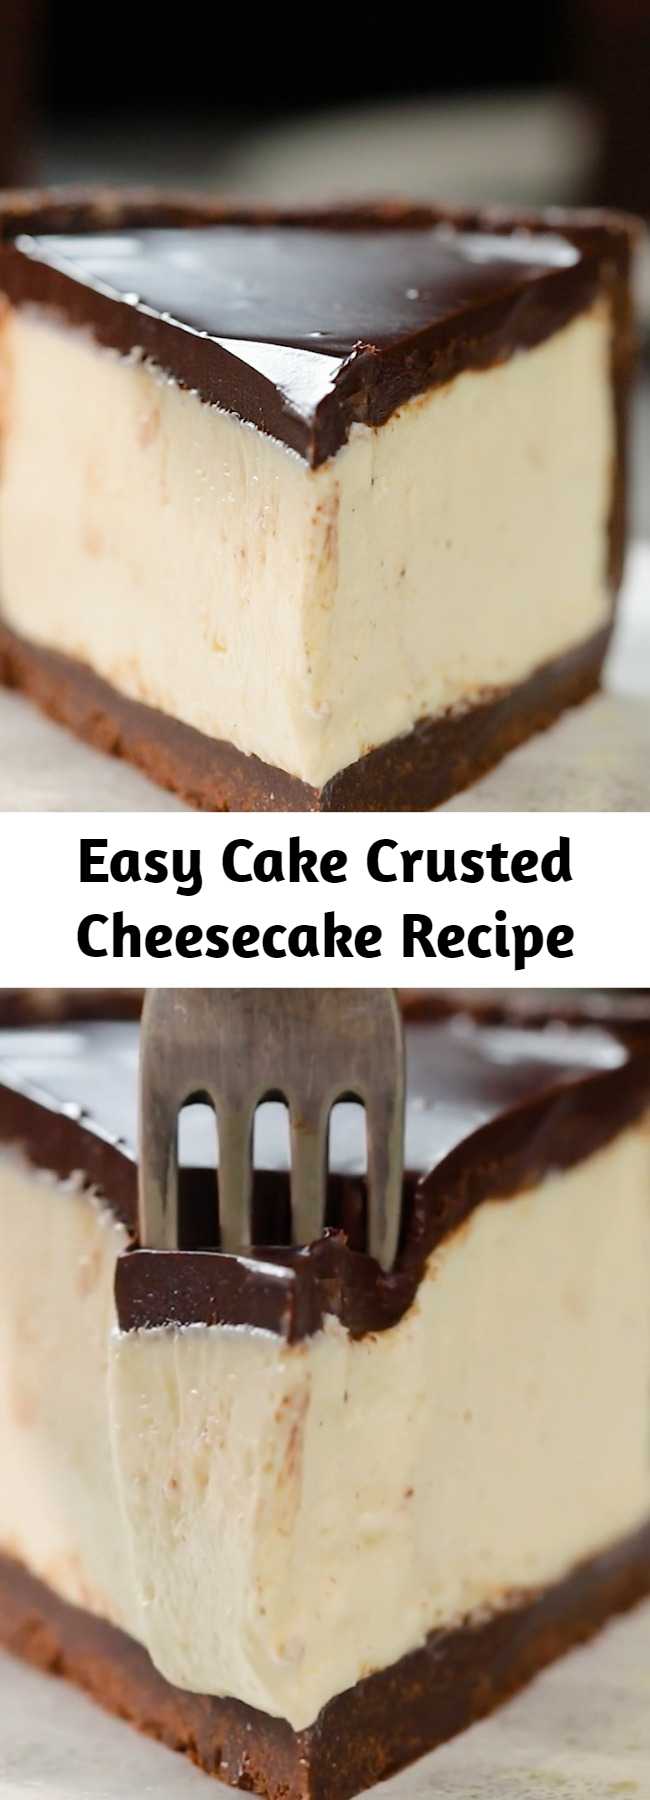 Easy Cake Crusted Cheesecake Recipe - Cake and Cheesecake all in one!